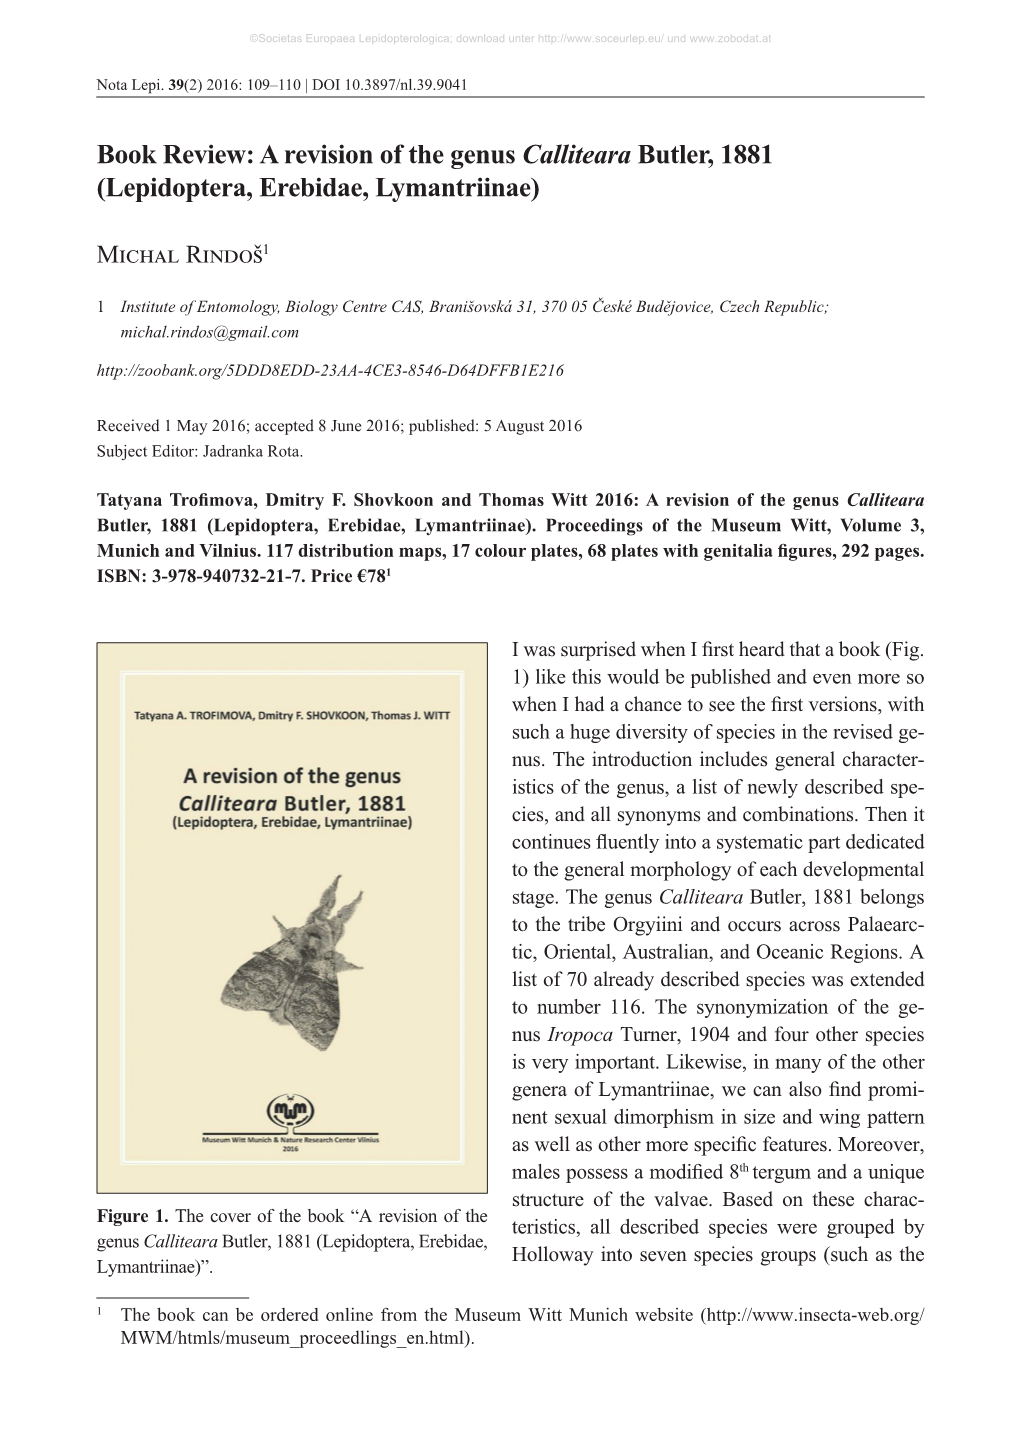 A Revision of the Genus Calliteara Butler, 1881 (Lepidoptera, Erebidae, Lymantriinae)